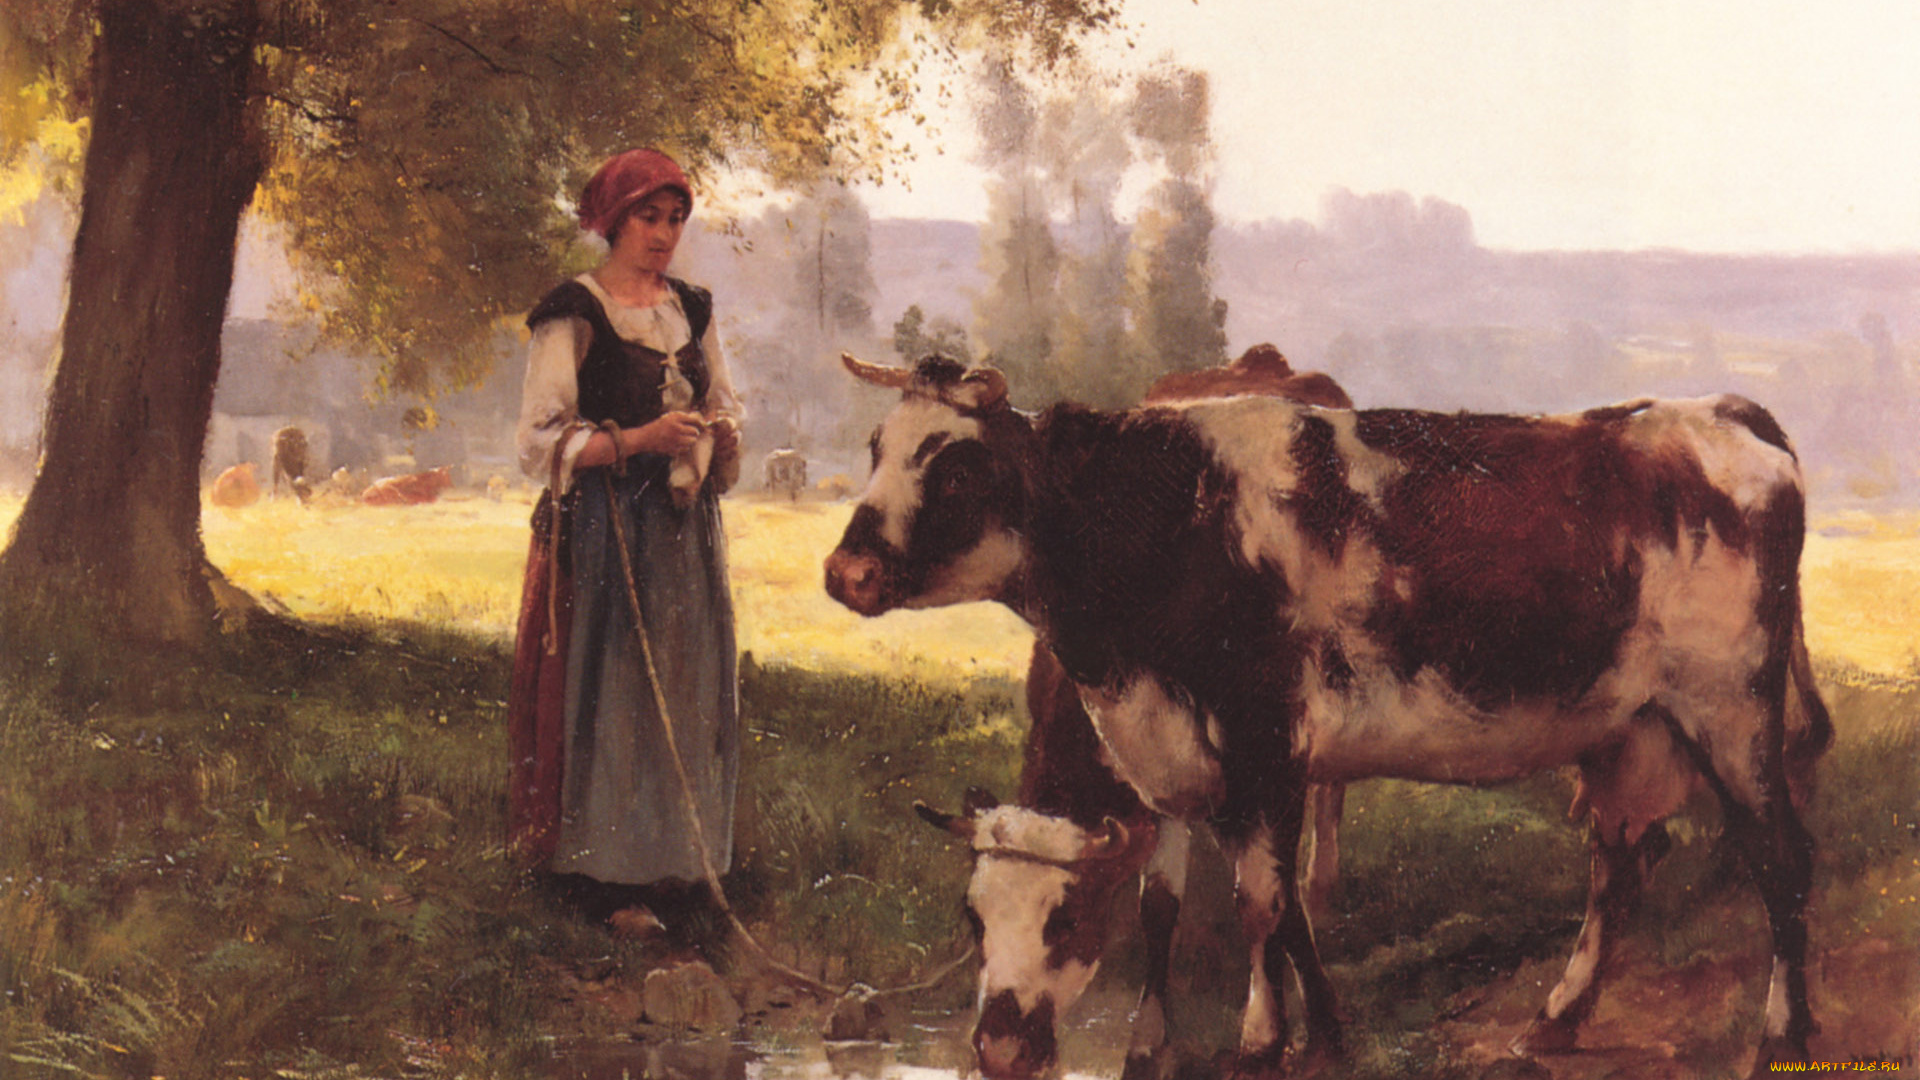 dupre, la, vachere, рисованное, живопись, крестьянка, коровы, julien, dupre